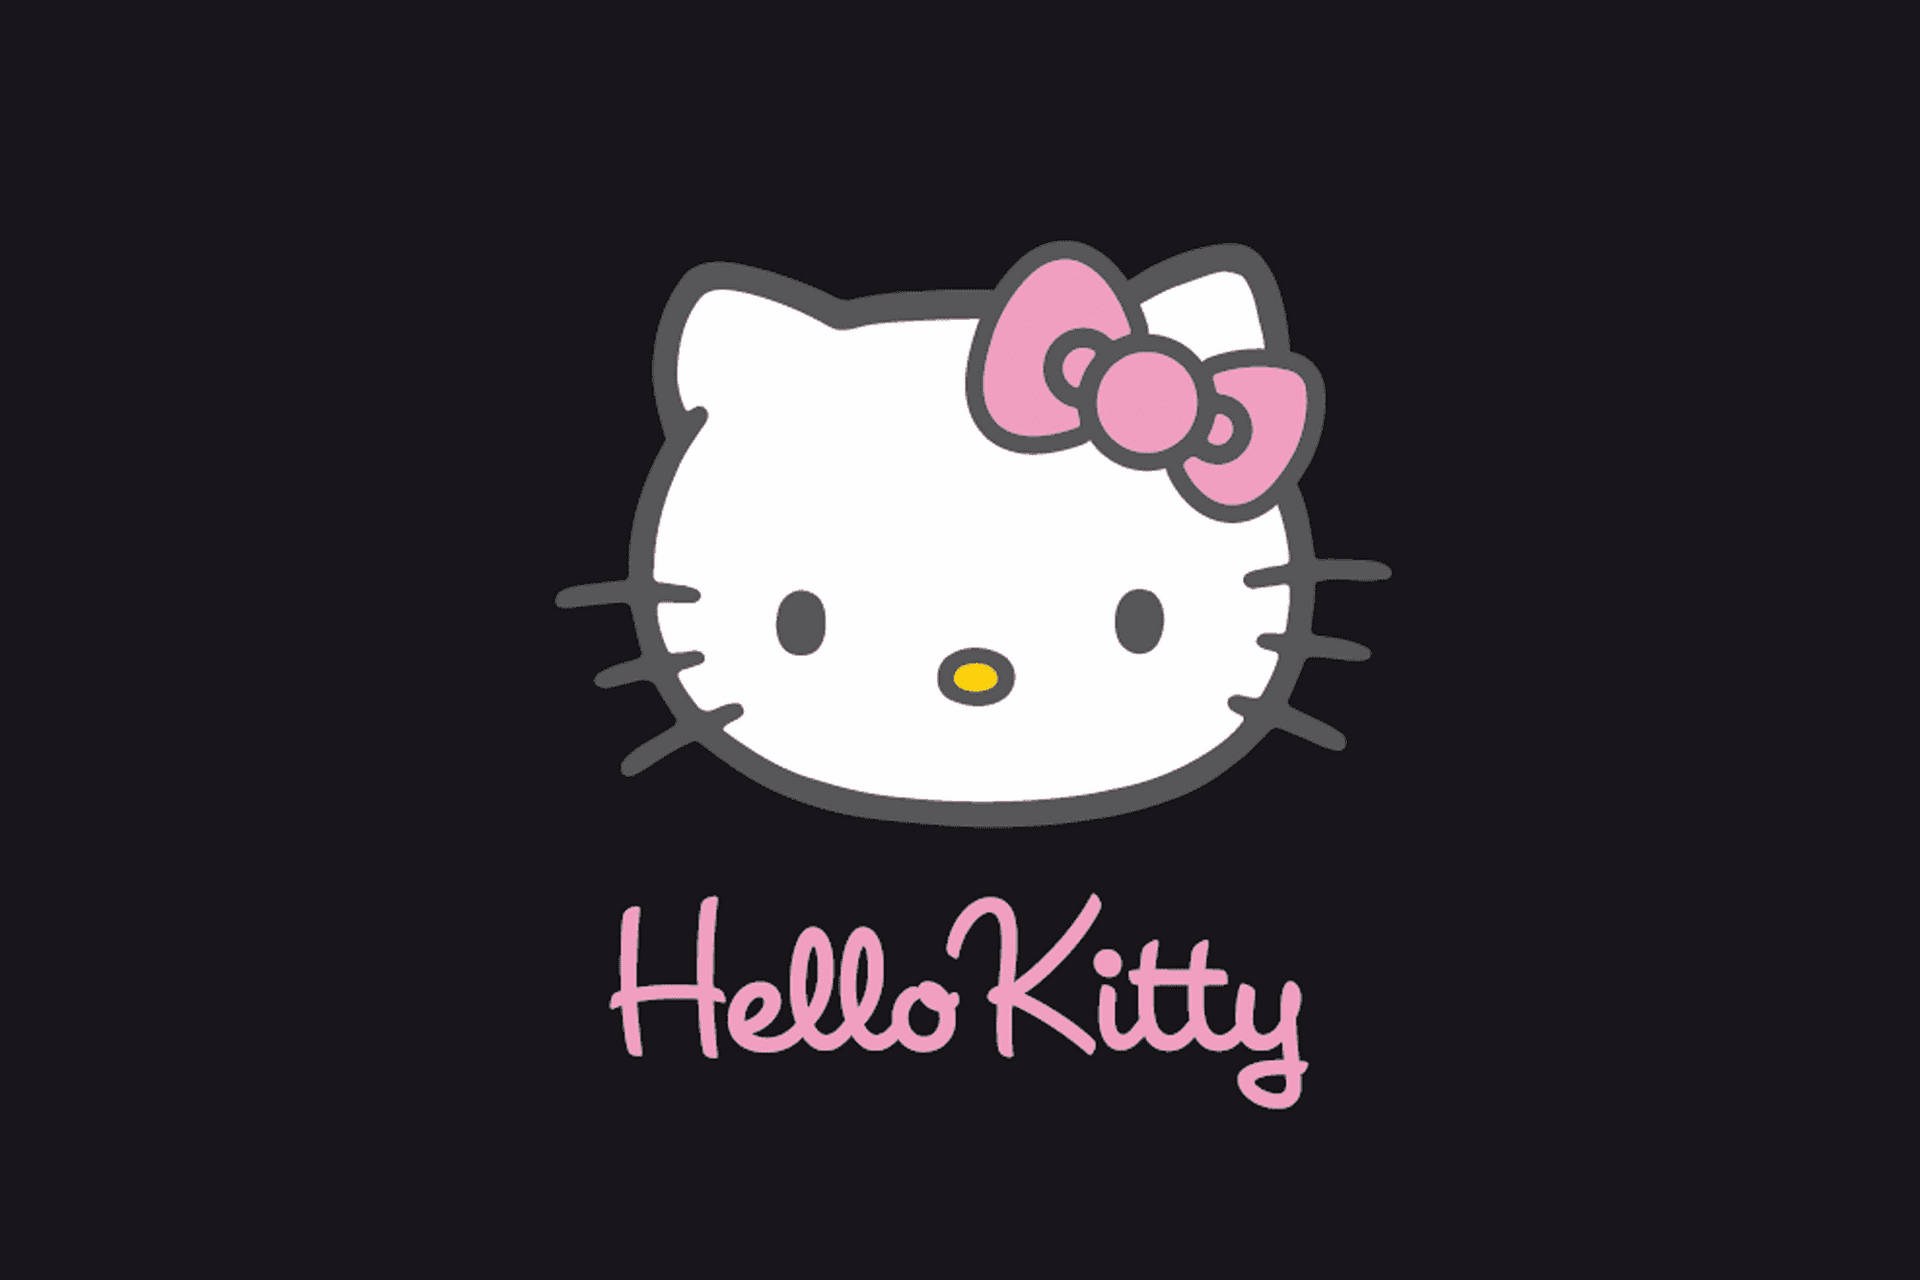 3D Adorable Hello kitty Wallpaper – My Original Wallpaper